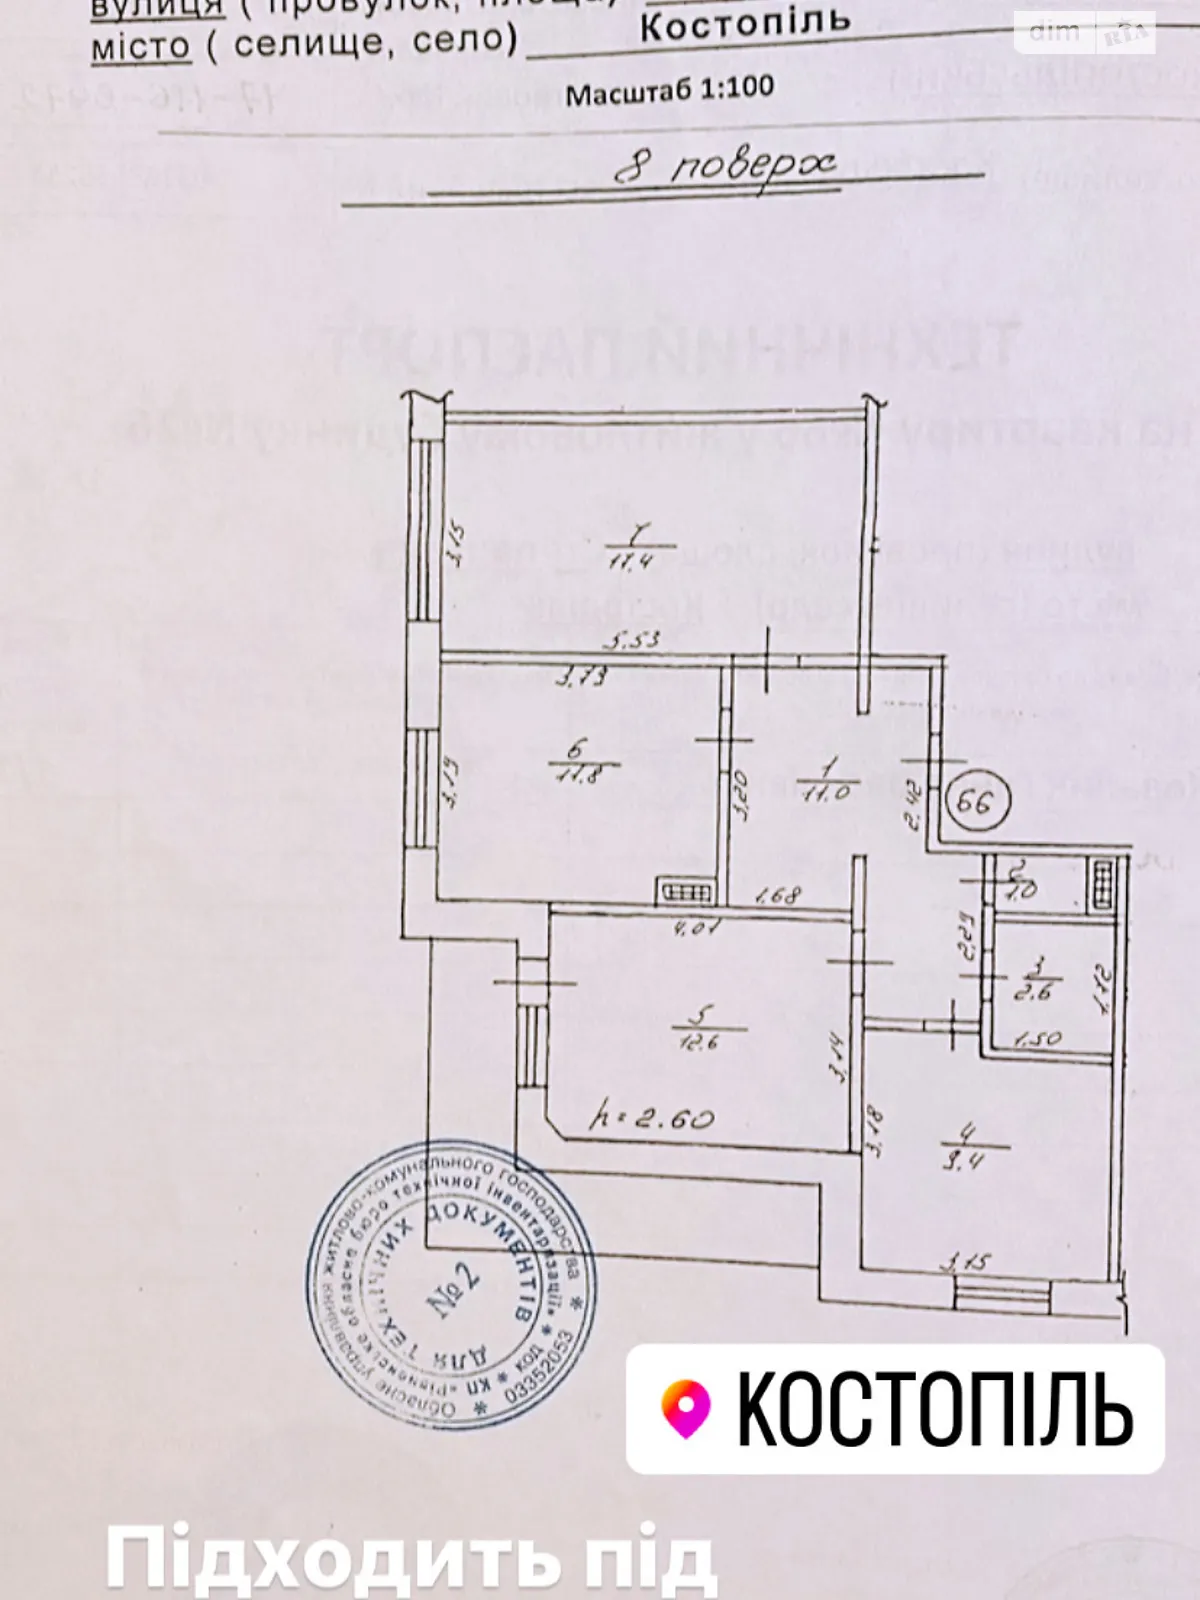 Продается 3-комнатная квартира 68.5 кв. м в Костополе, цена: 27400 $ - фото 1